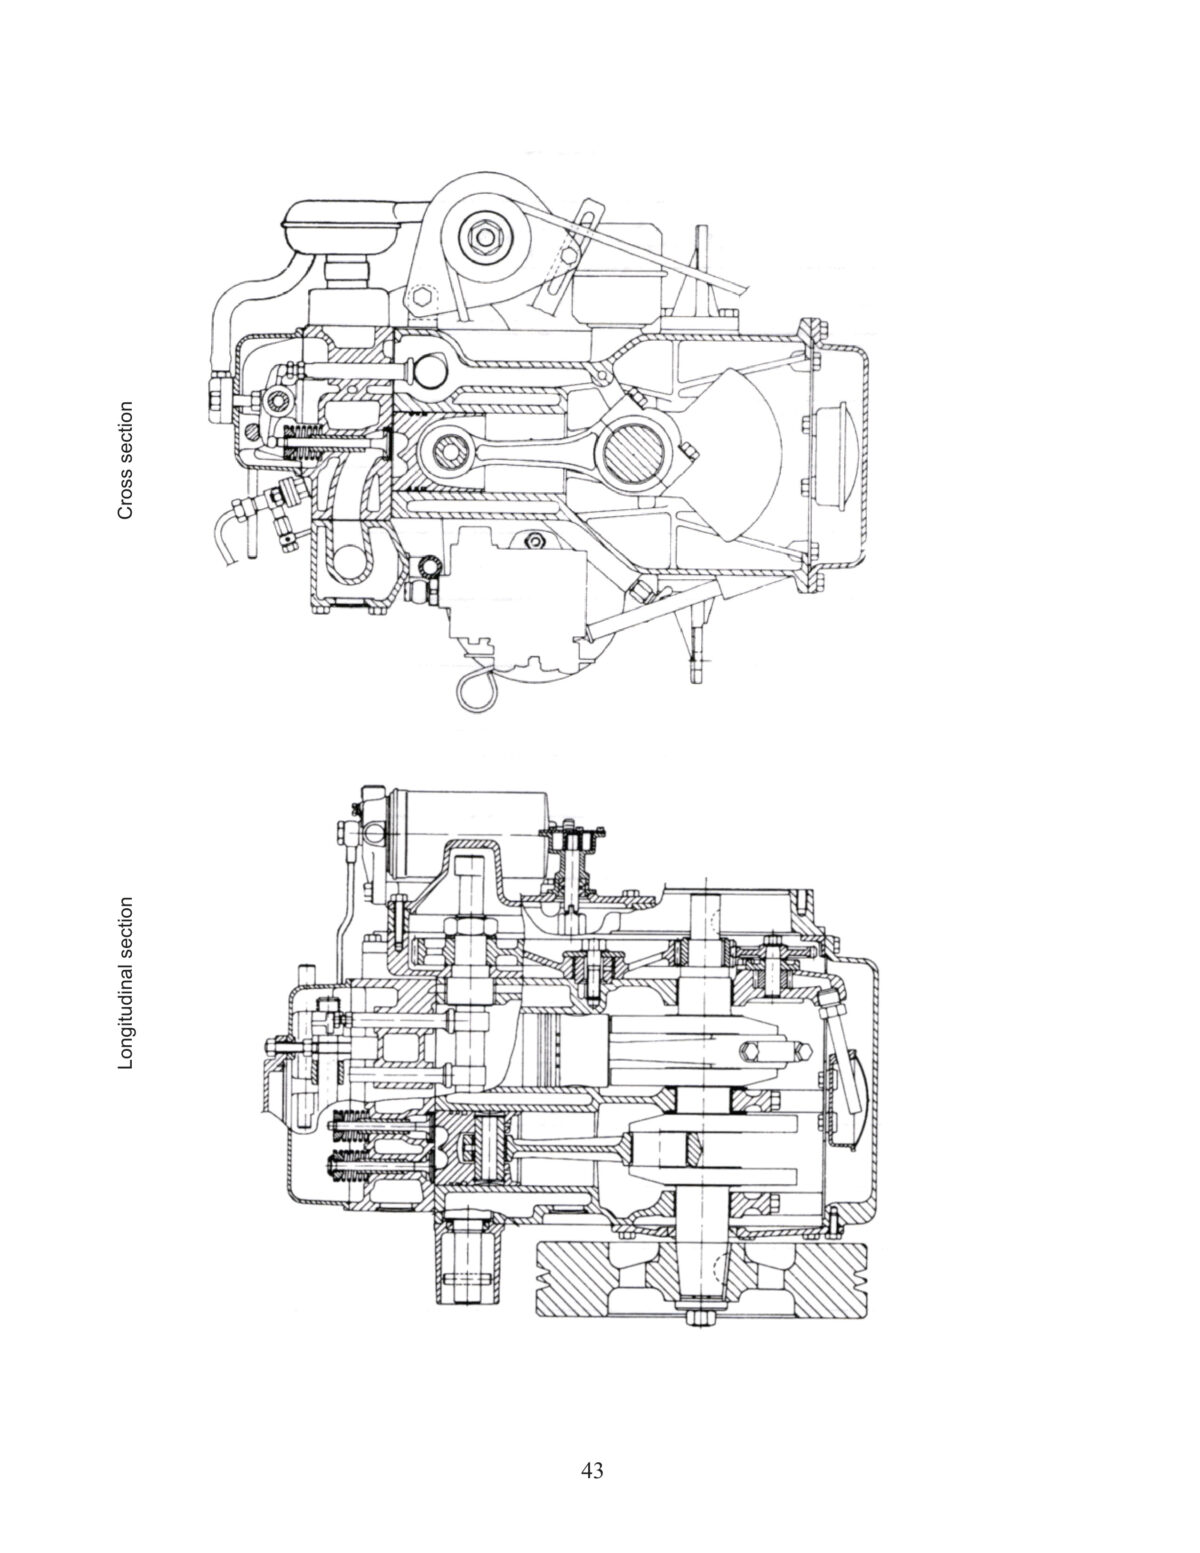 Volvo Penta Marine & Industrial Engine (TMD6A, MD7A) Workshop Manual